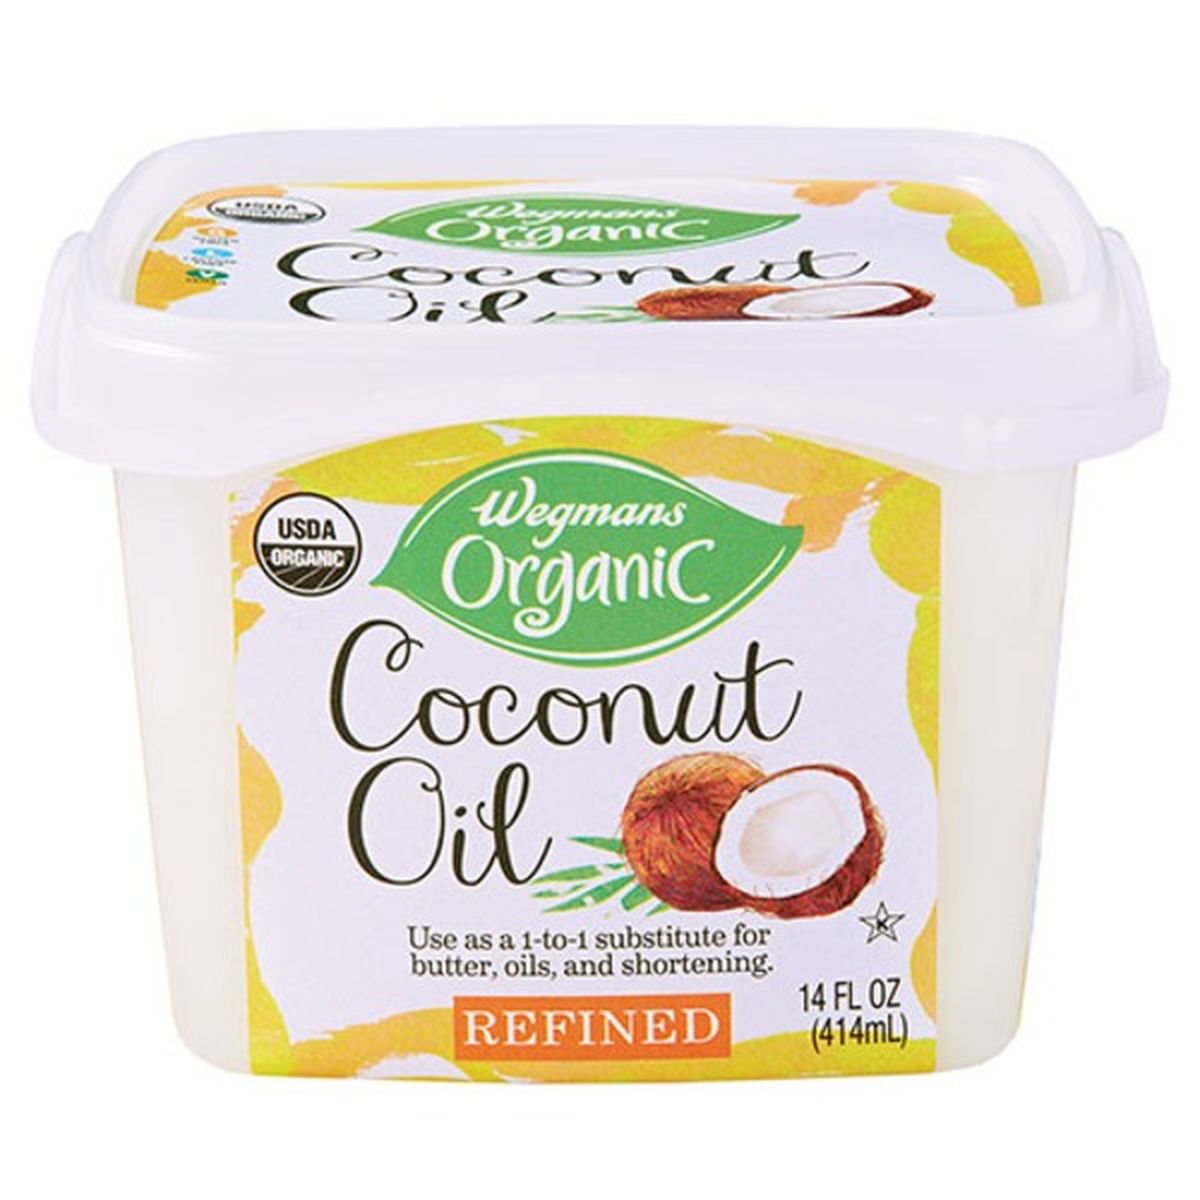 Calories in Wegmans Organic Refined Coconut Oil